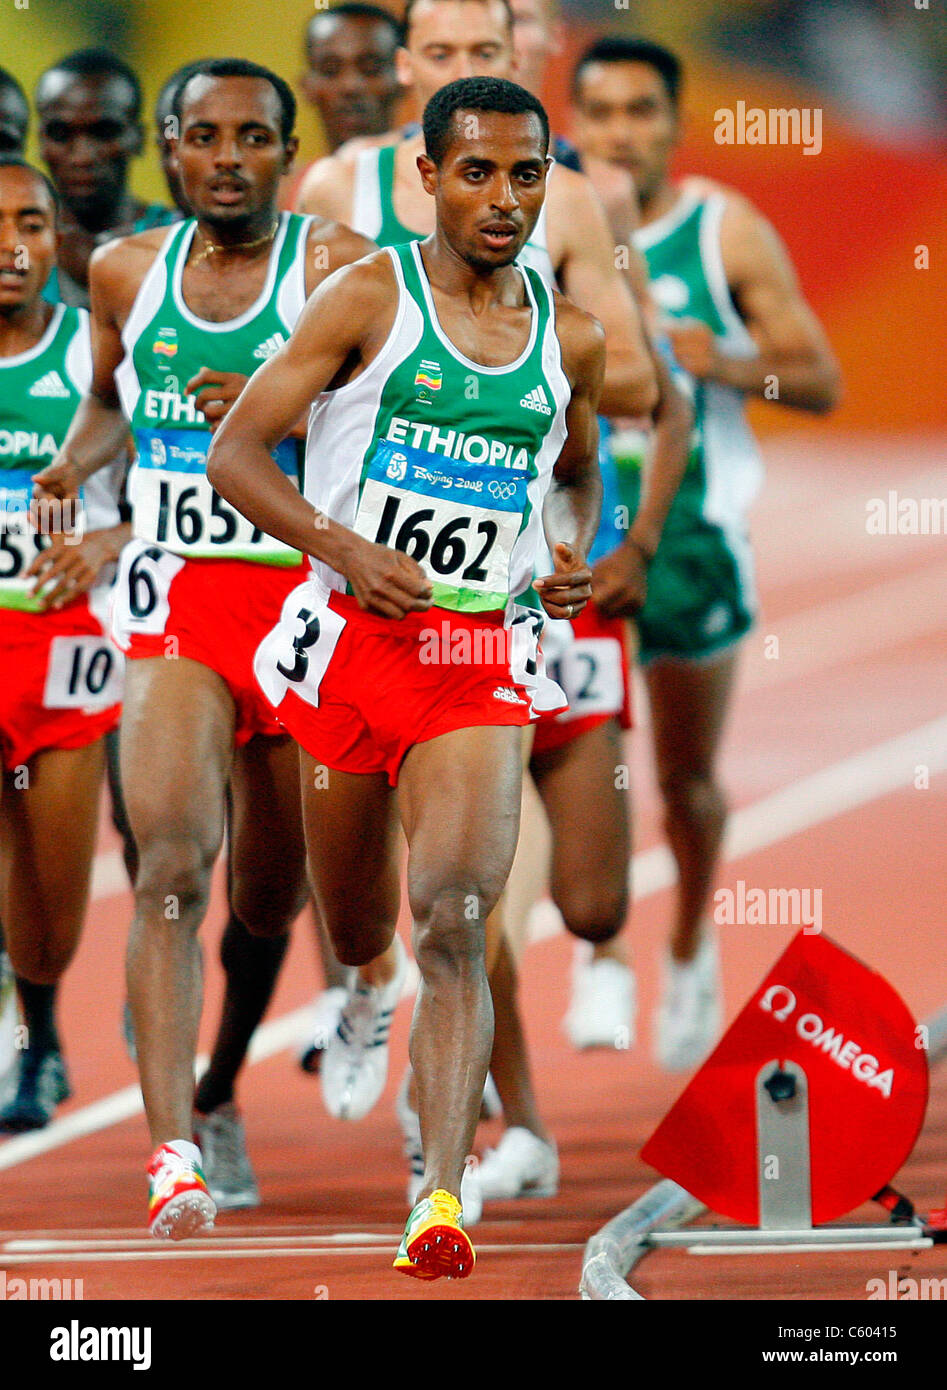 Kenenisa bekele ethiopia hi-res stock photography and images - Alamy